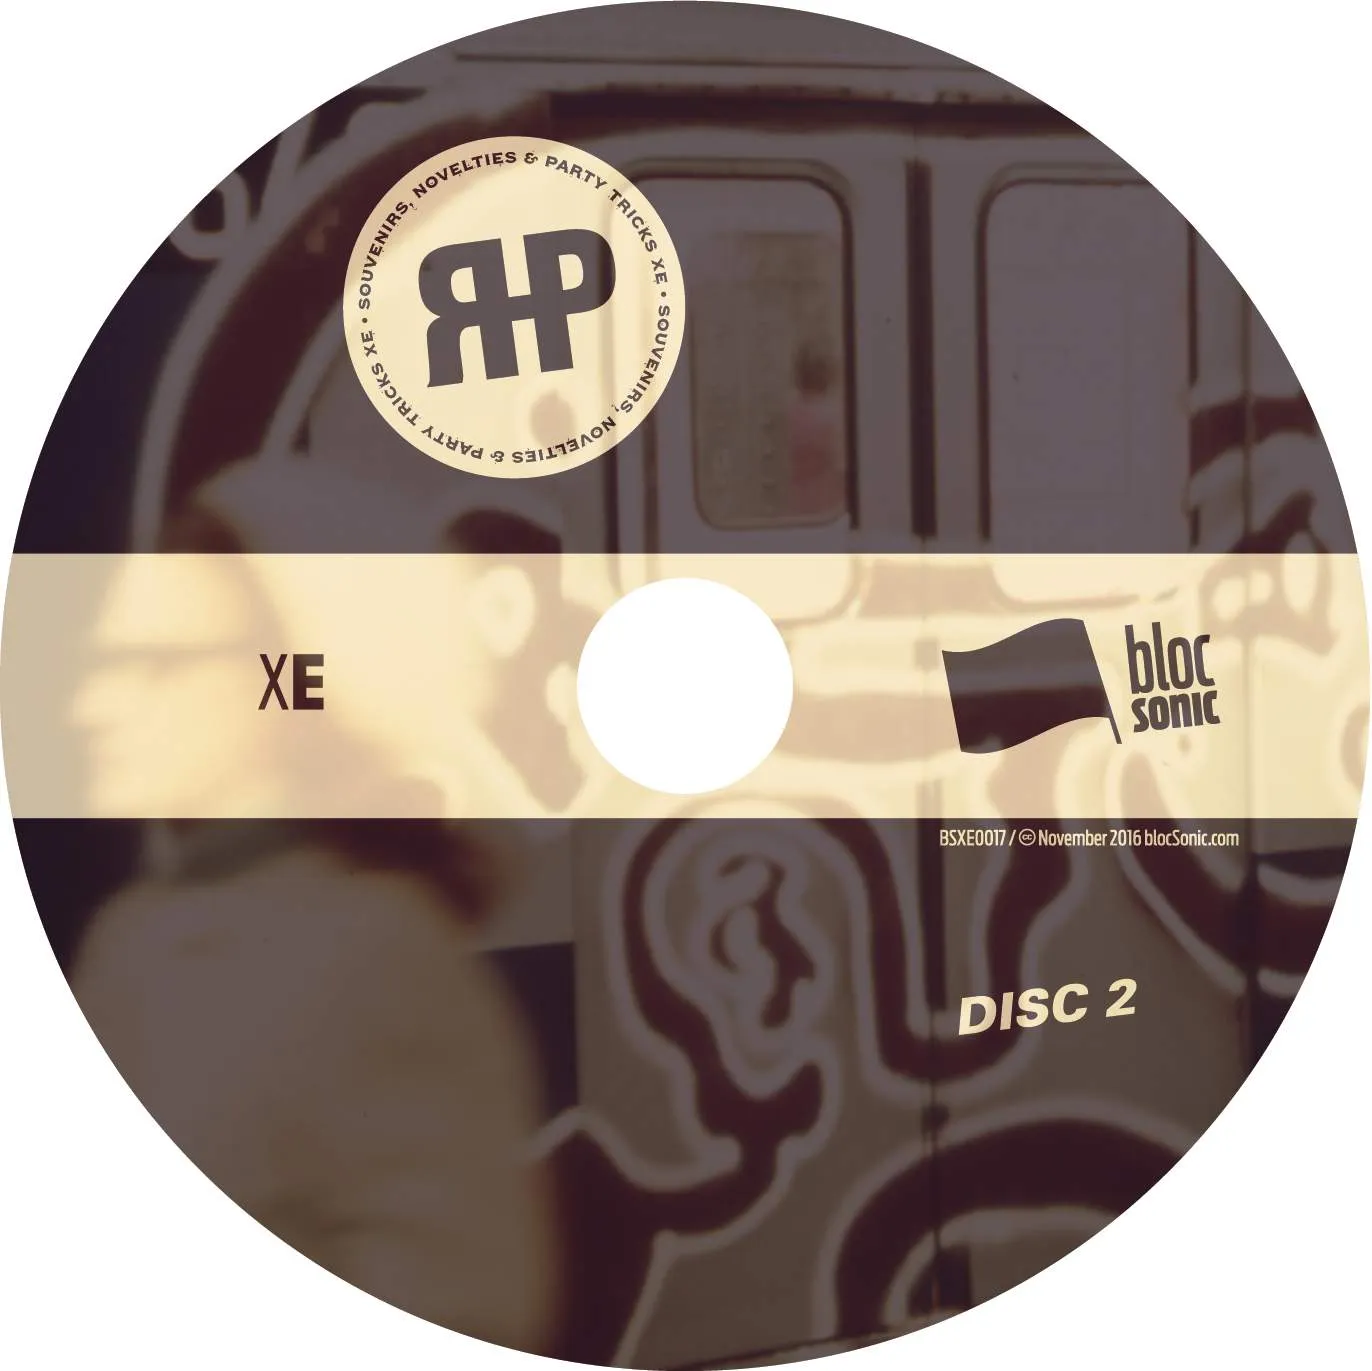 Album disc for “Souvenirs, Novelties &amp; Party Tricks XE” by Regenerated Headpiece